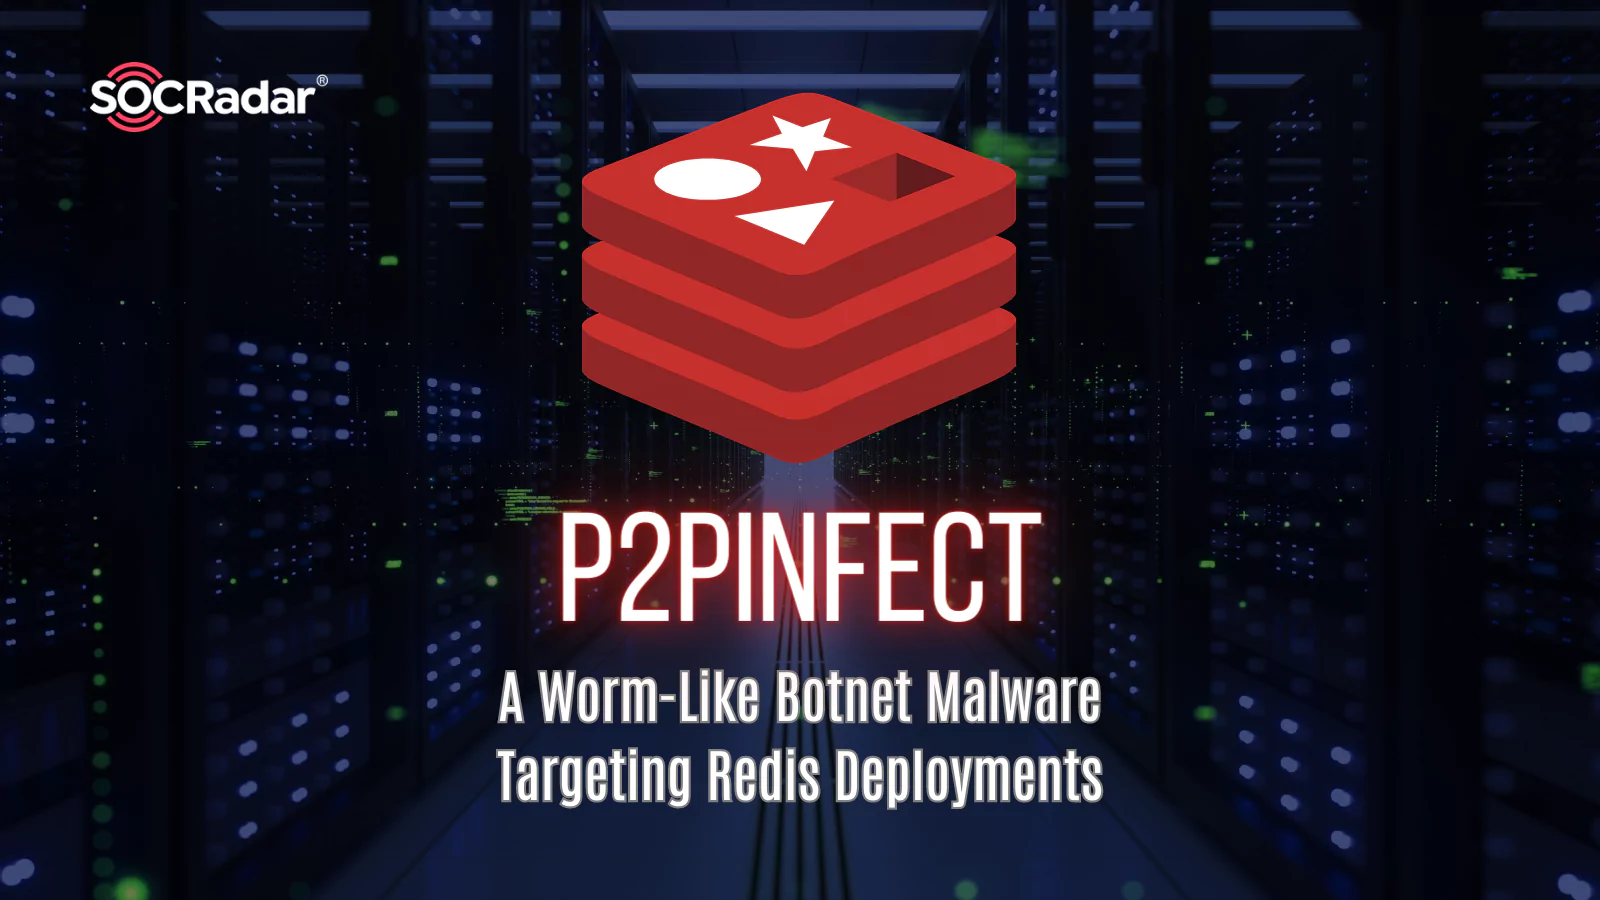 SOCRadar® Cyber Intelligence Inc. | P2Pinfect: A Worm-Like Botnet Malware Targeting Redis Deployments